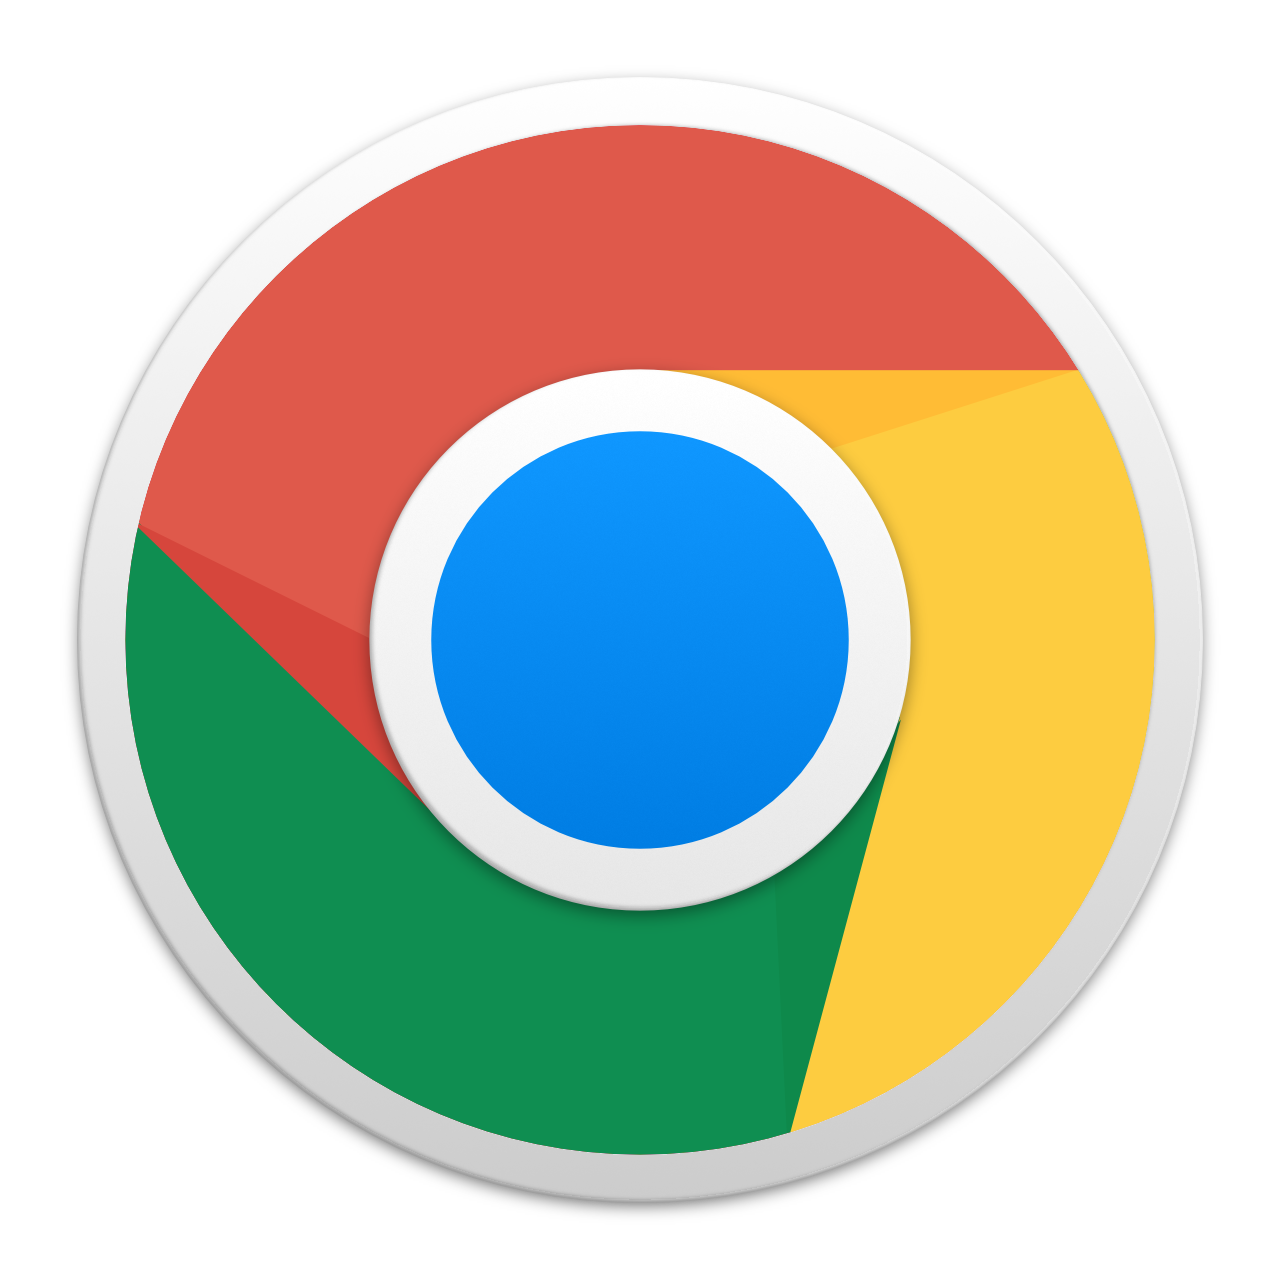 Google chrome png. Logo images free download